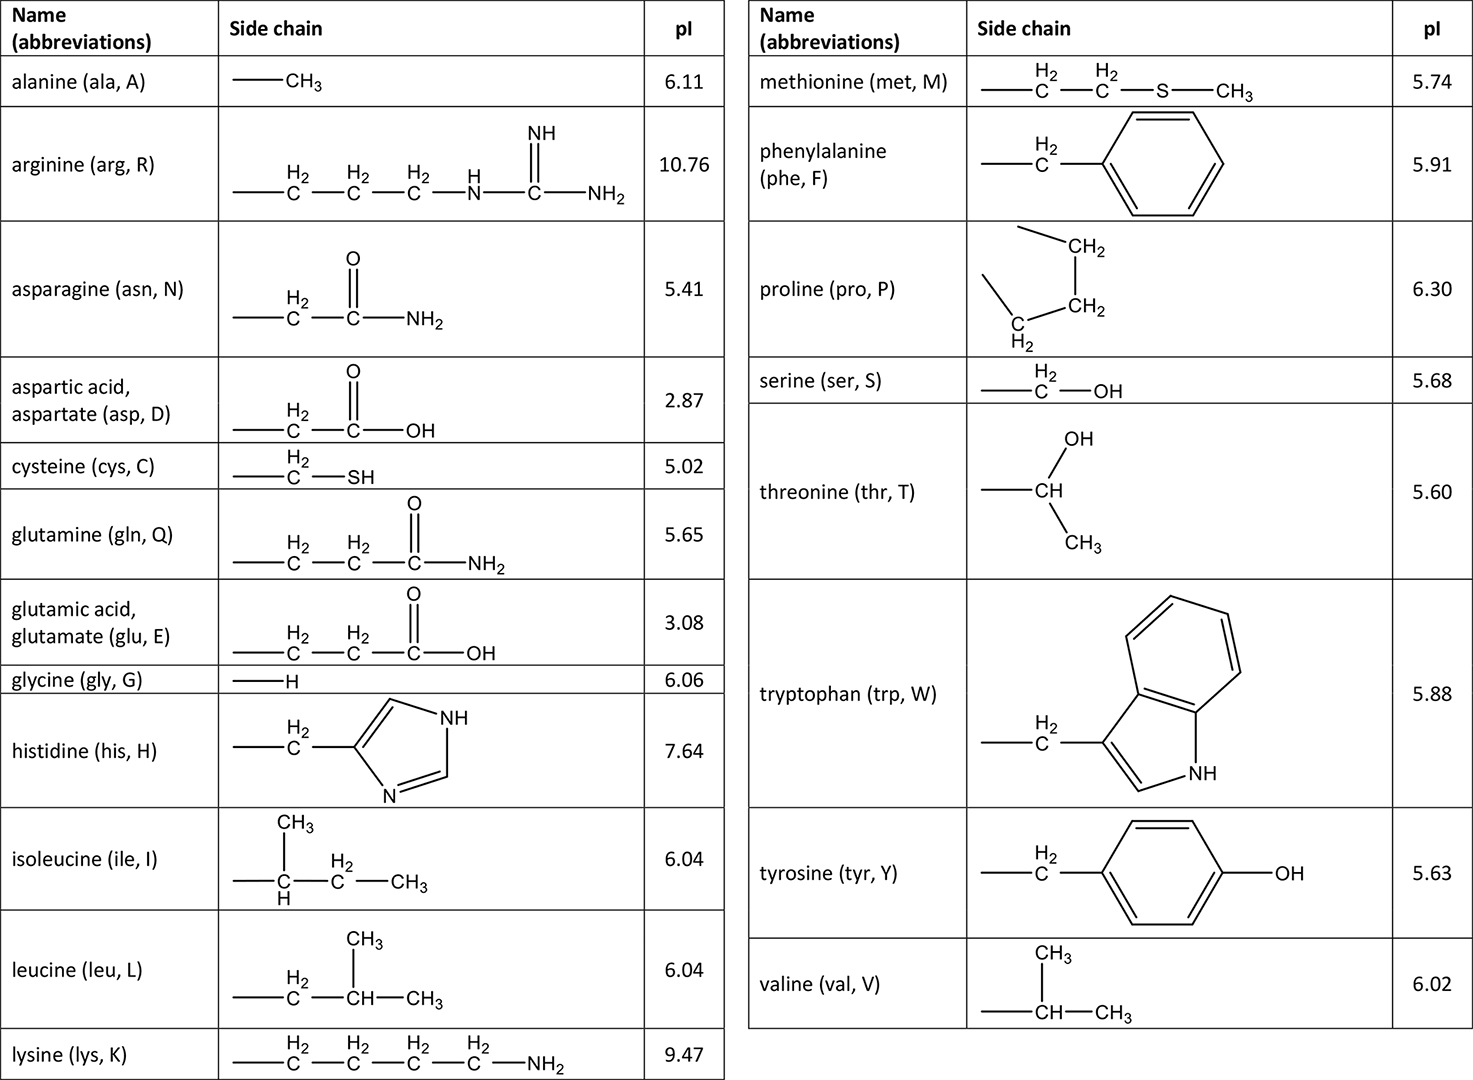 amino acid reference sheet_bw.jpg